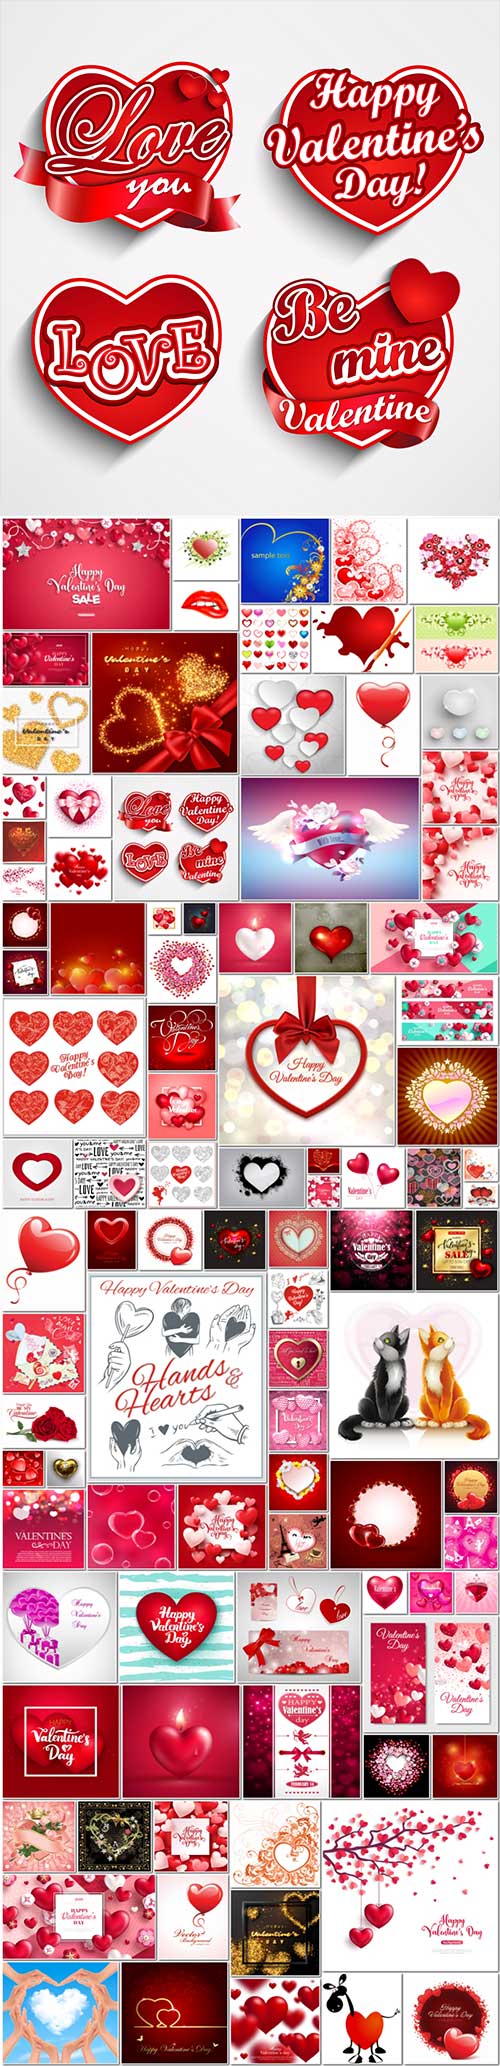 100 Bundle Happy Valentines Day, love, romance, hearts in vector vol 5